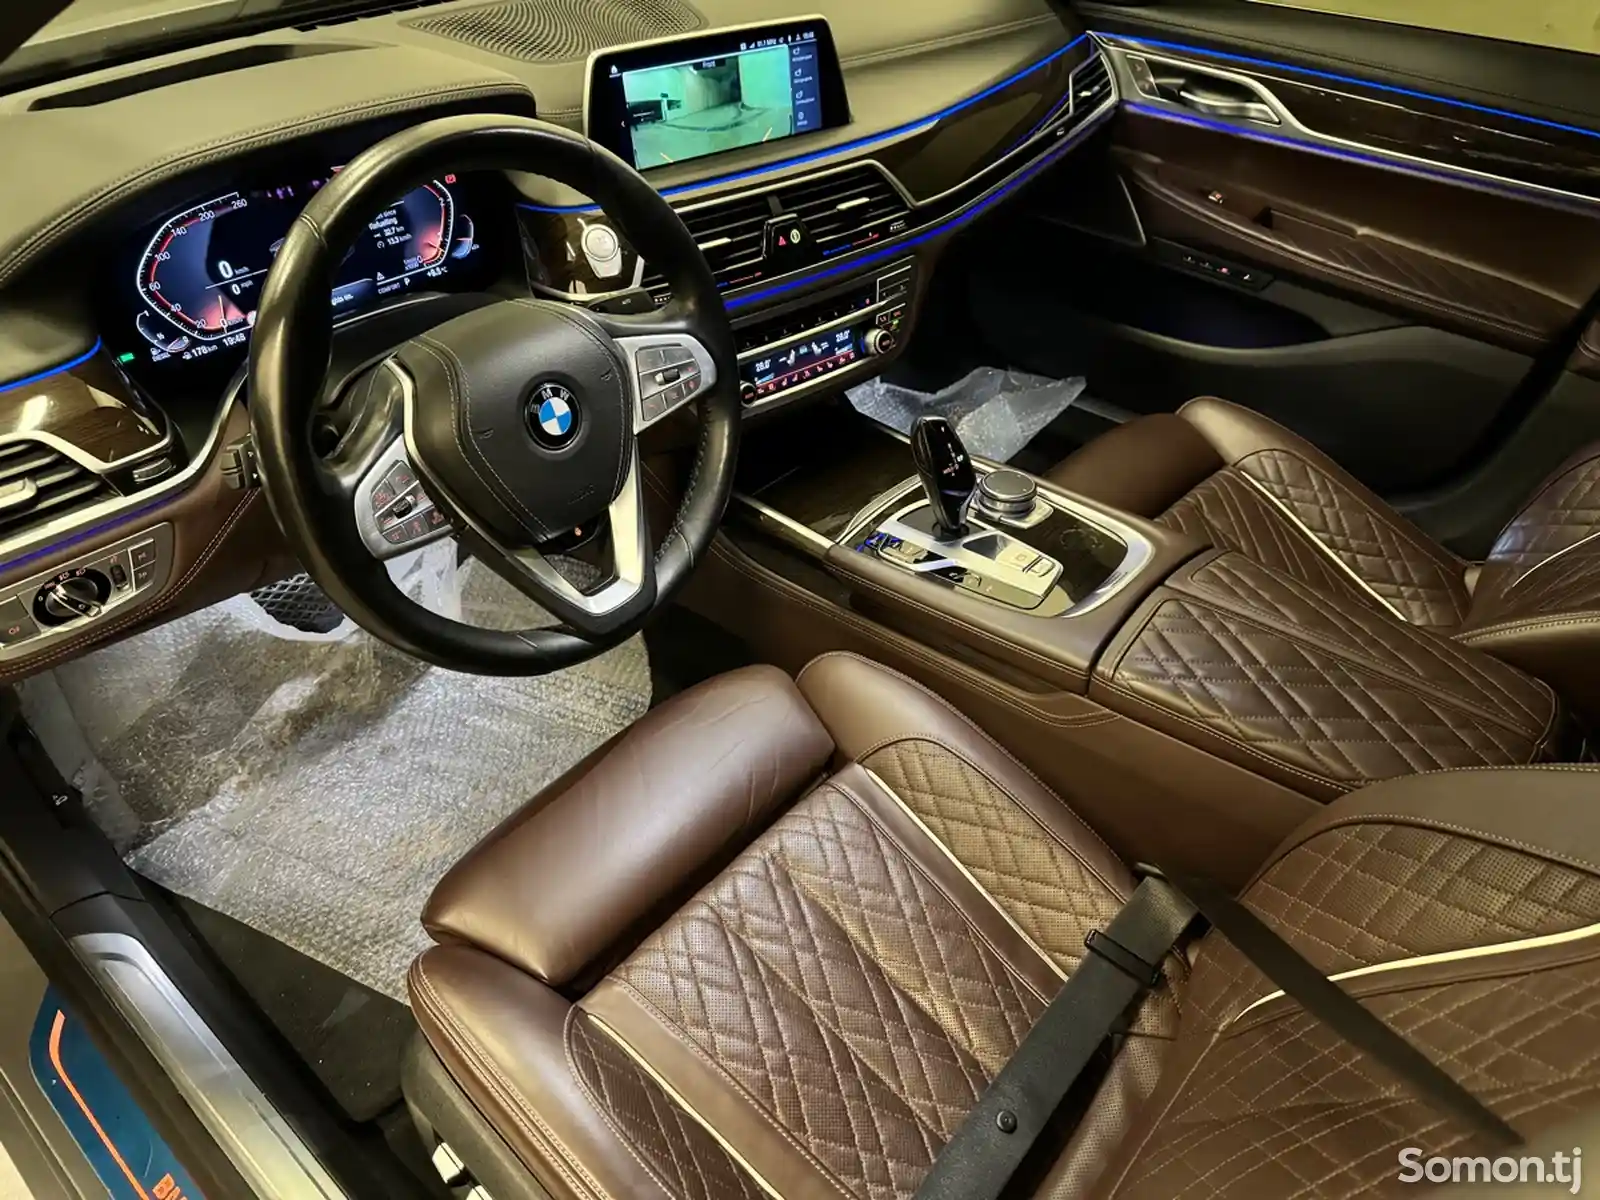 BMW 7 series, 2020-3